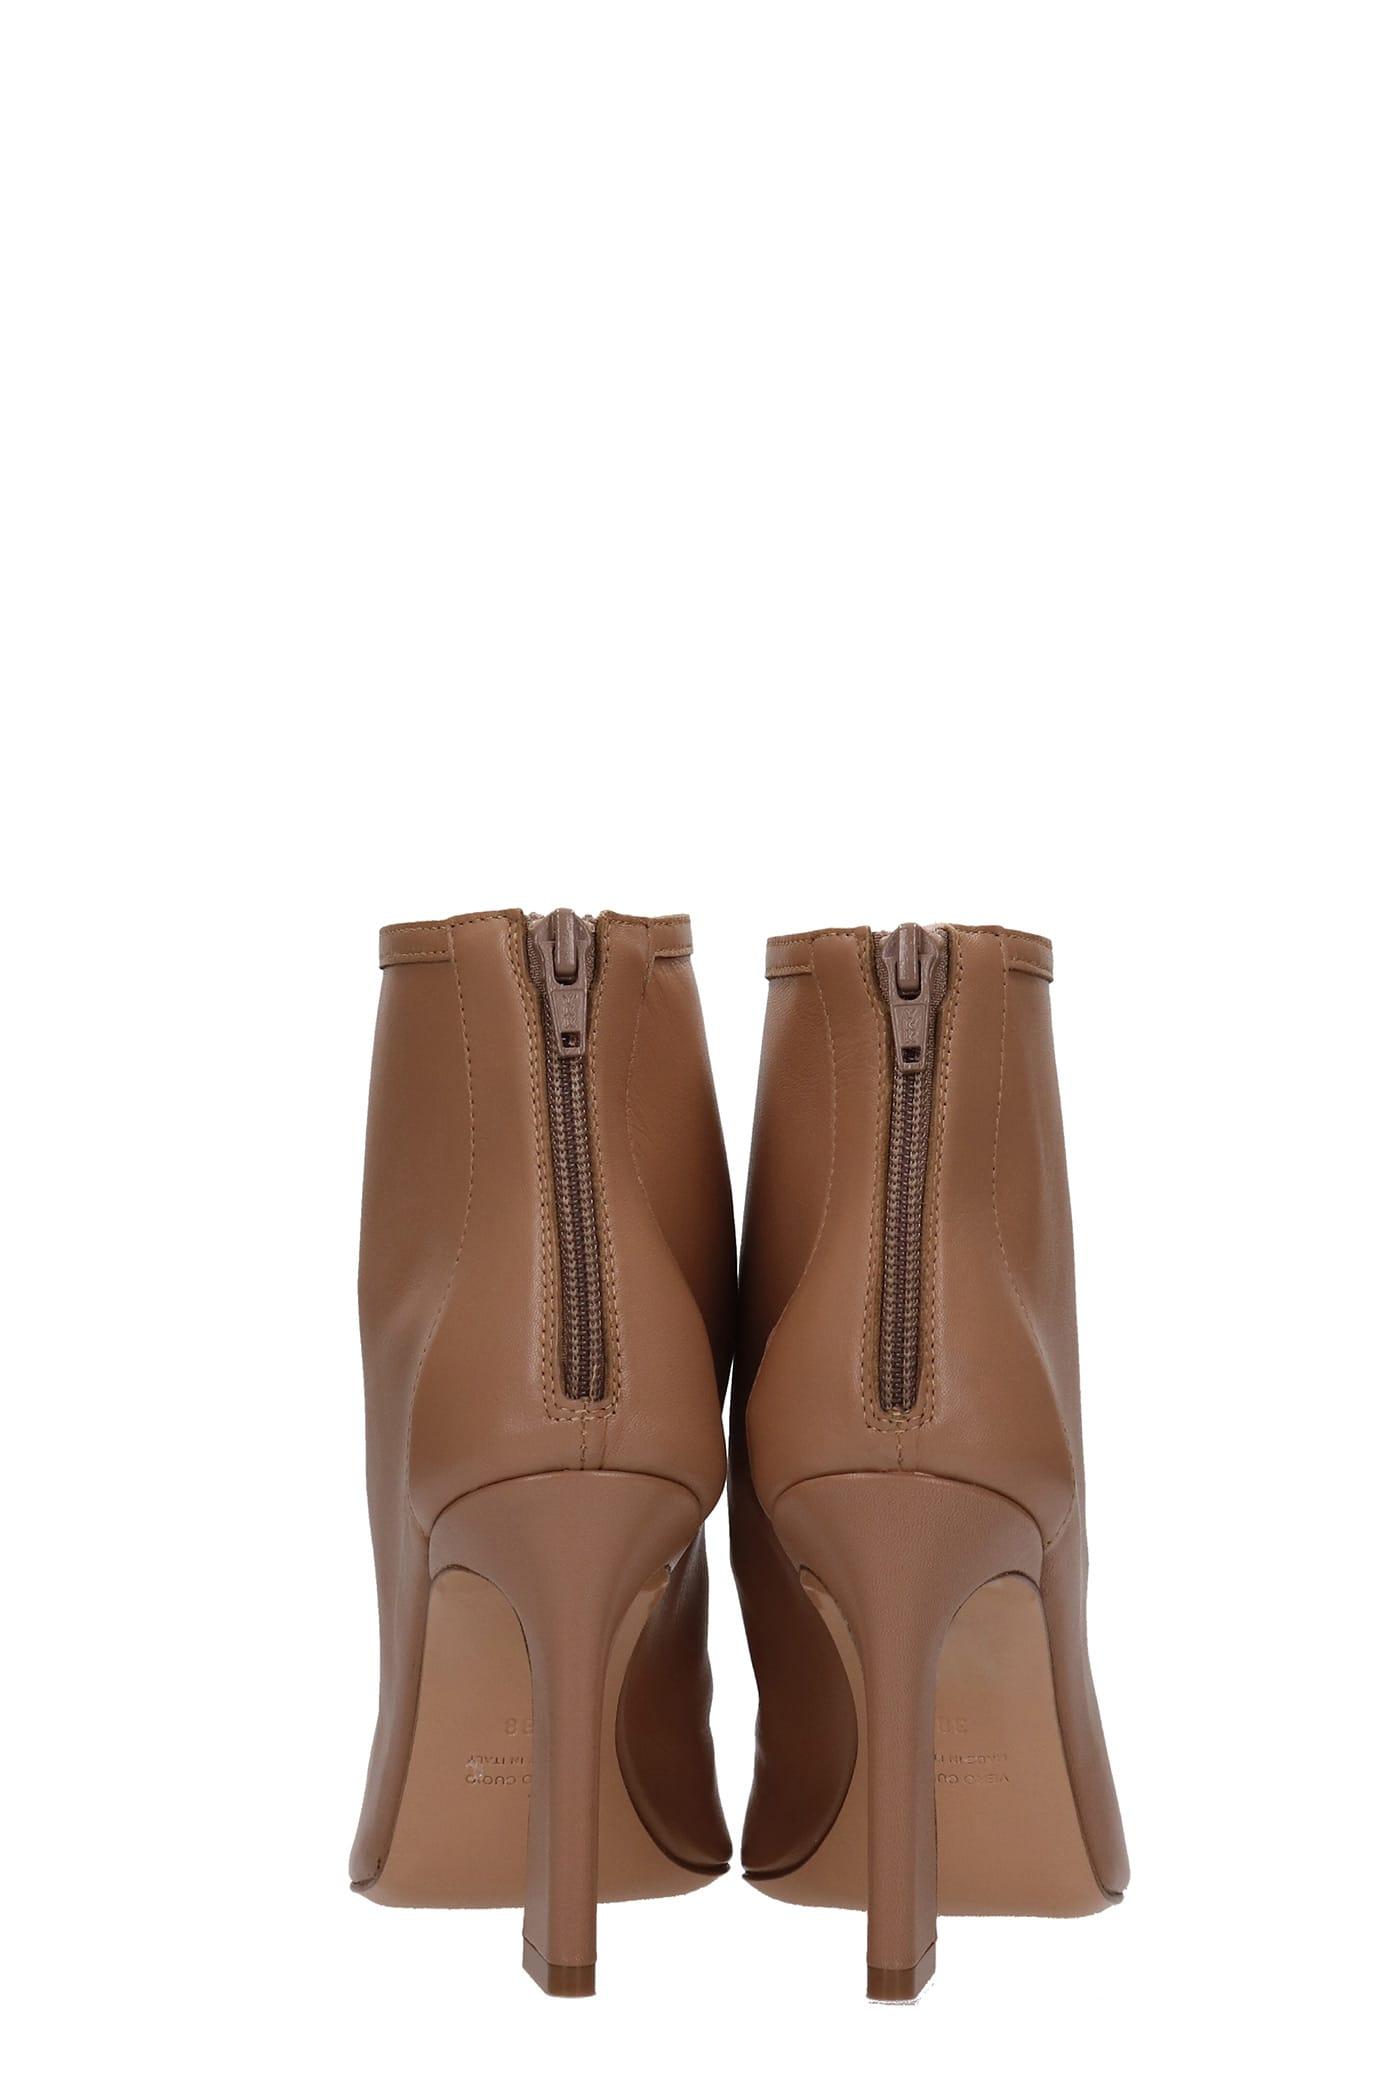 STILETTO ELEGANCE – CAMEL Stiletto heels with brooch | miMaO ®